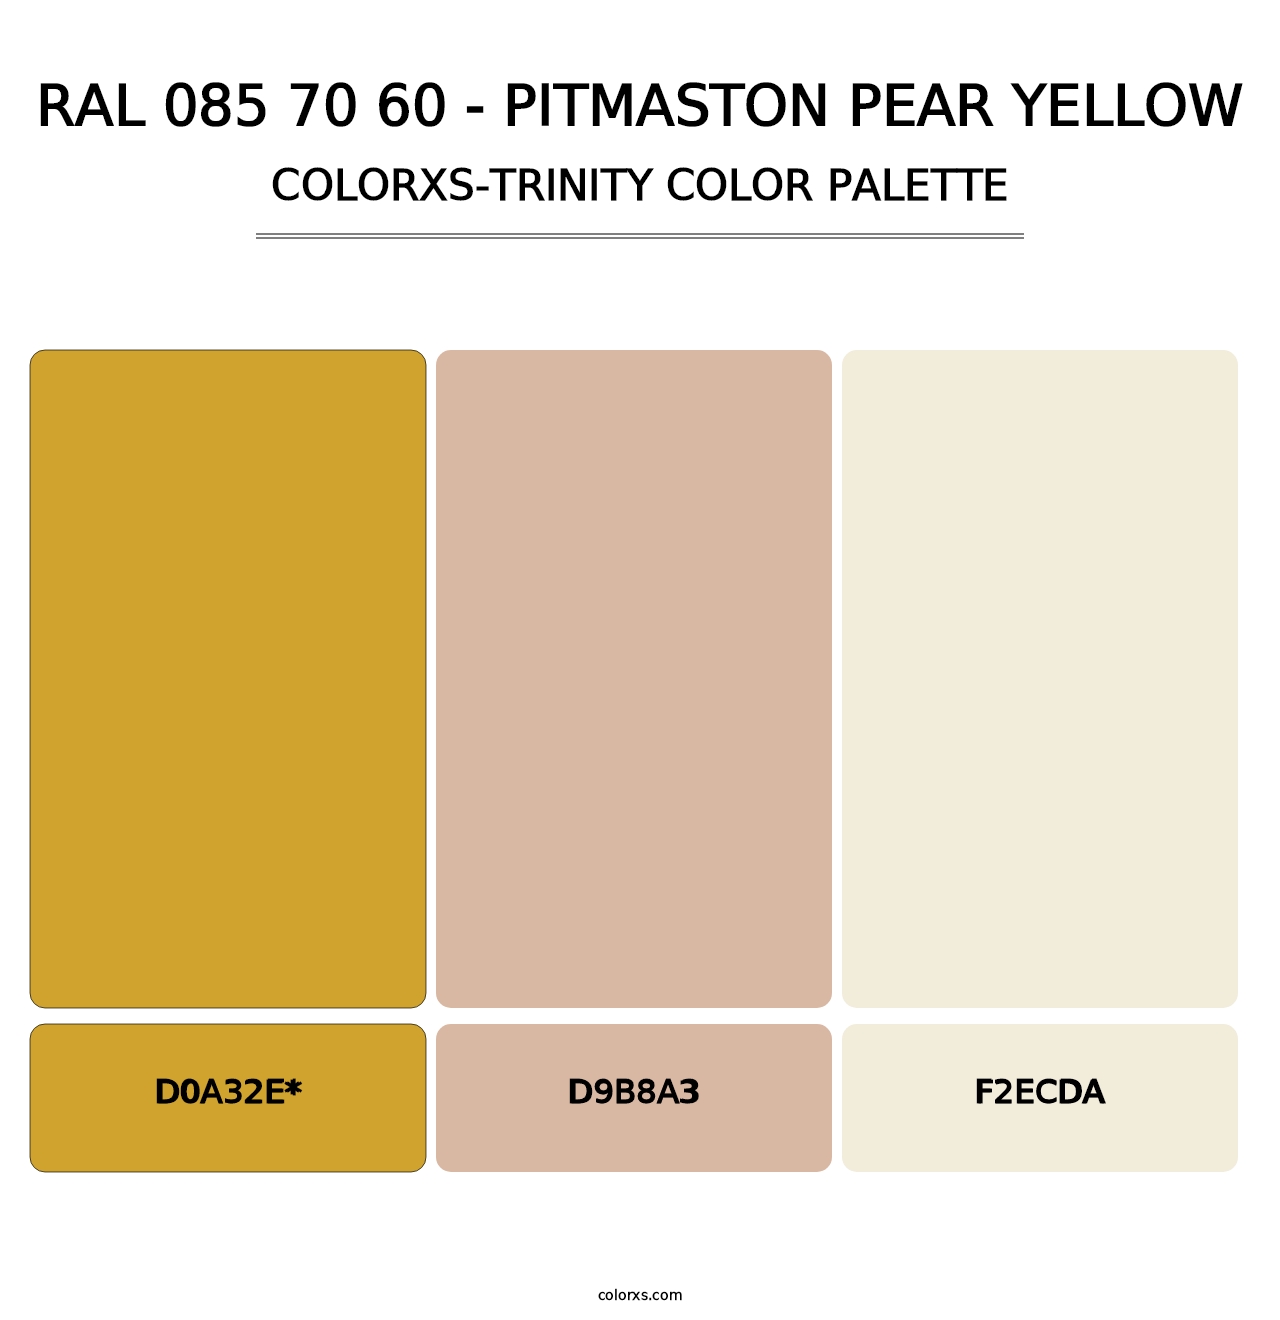 RAL 085 70 60 - Pitmaston Pear Yellow - Colorxs Trinity Palette